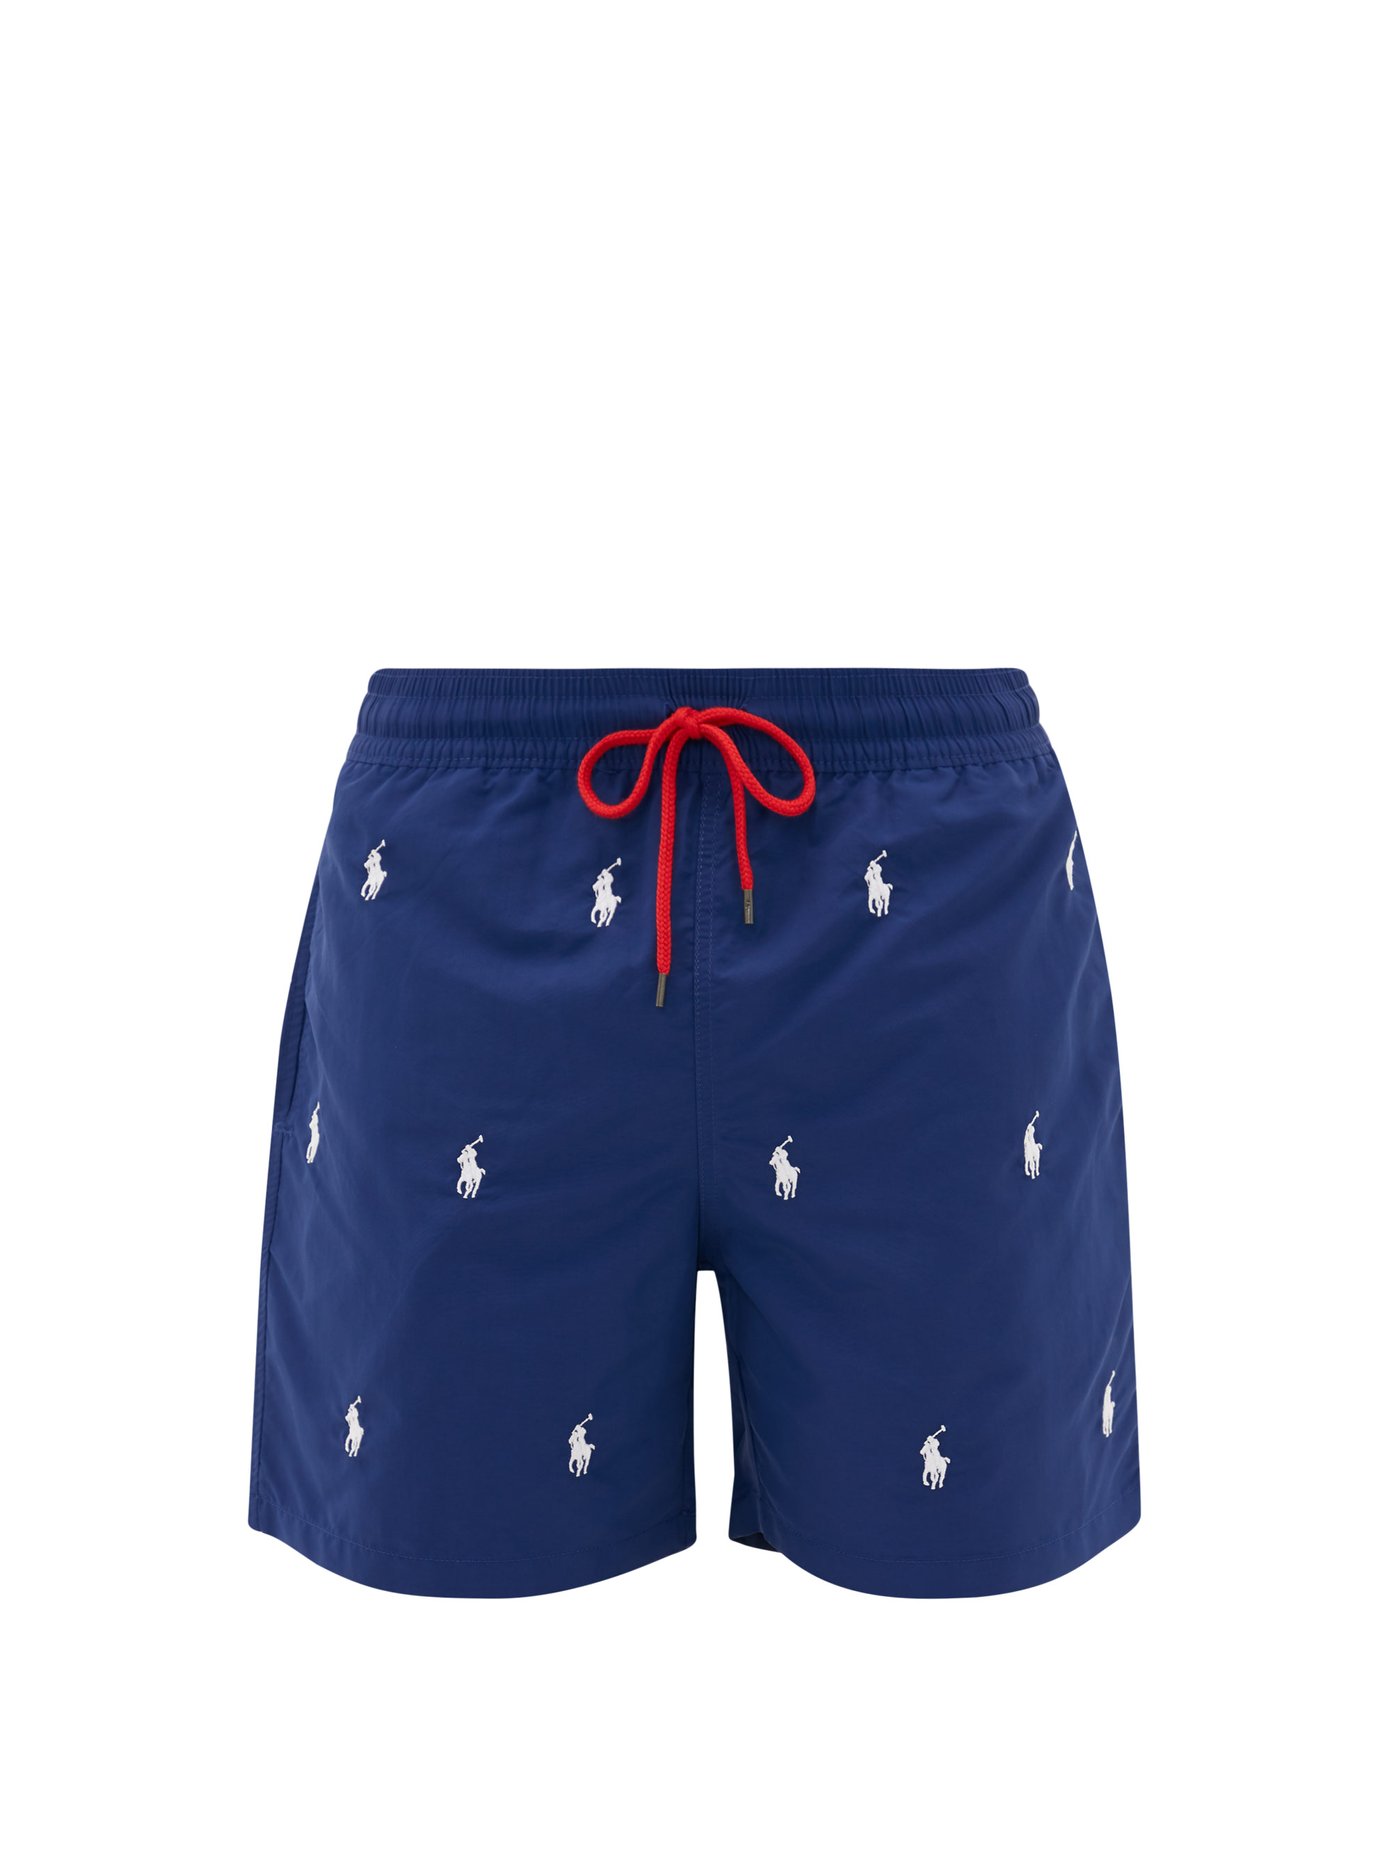 polo ralph lauren swimming shorts